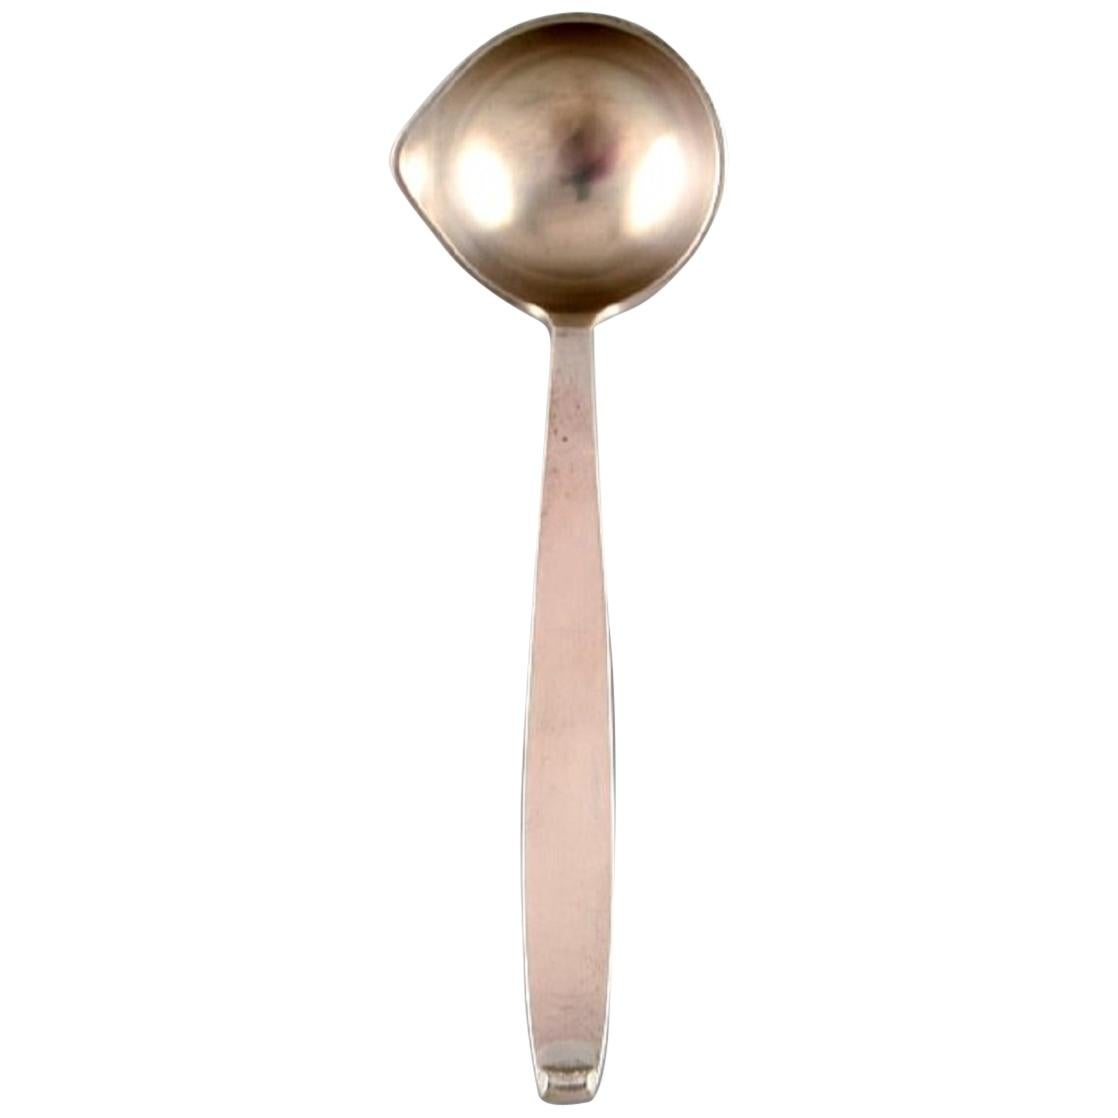 Evald Nielsen No. 29, Sauce Spoon in Full Silver, 1930s